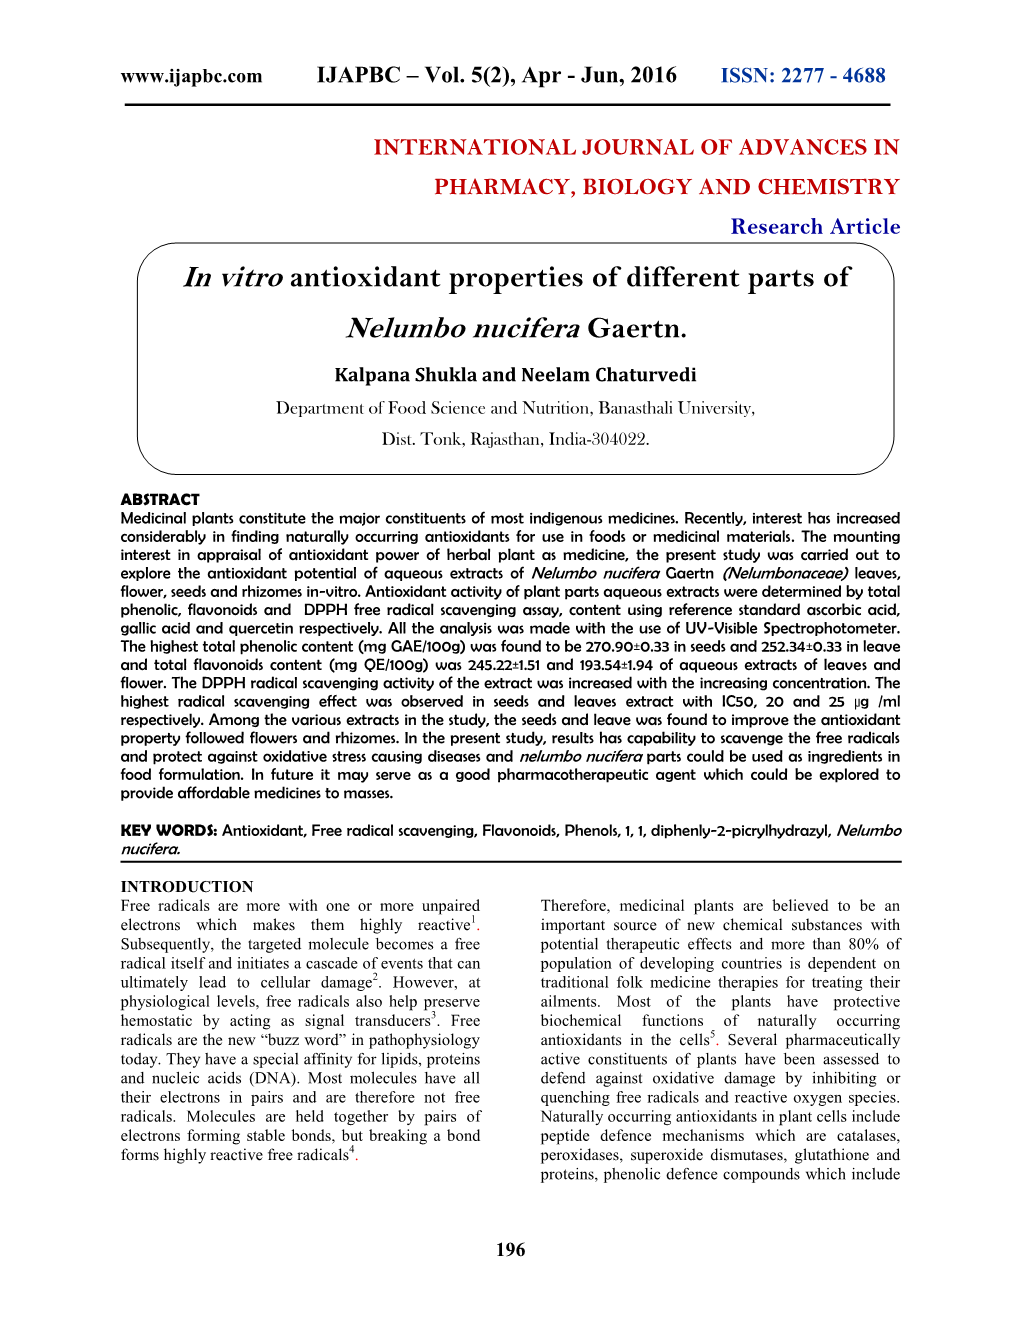 In Vitro Antioxidant Properties of Different Parts of Nelumbo Nucifera Gaertn